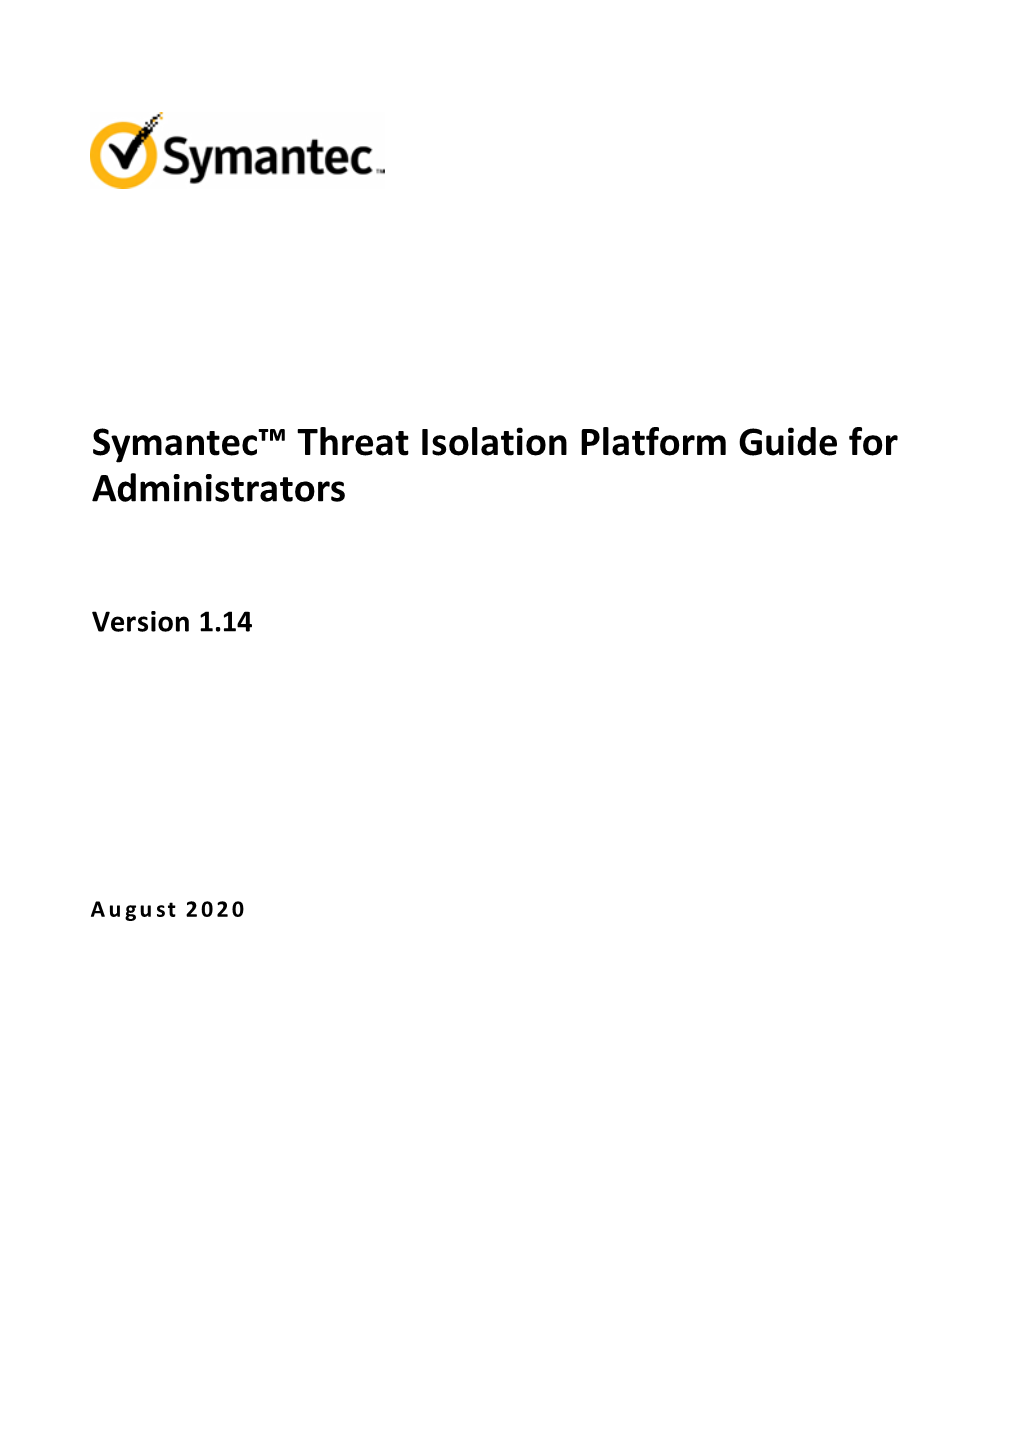 Symantec™ Threat Isolation Platform Guide for Administrators